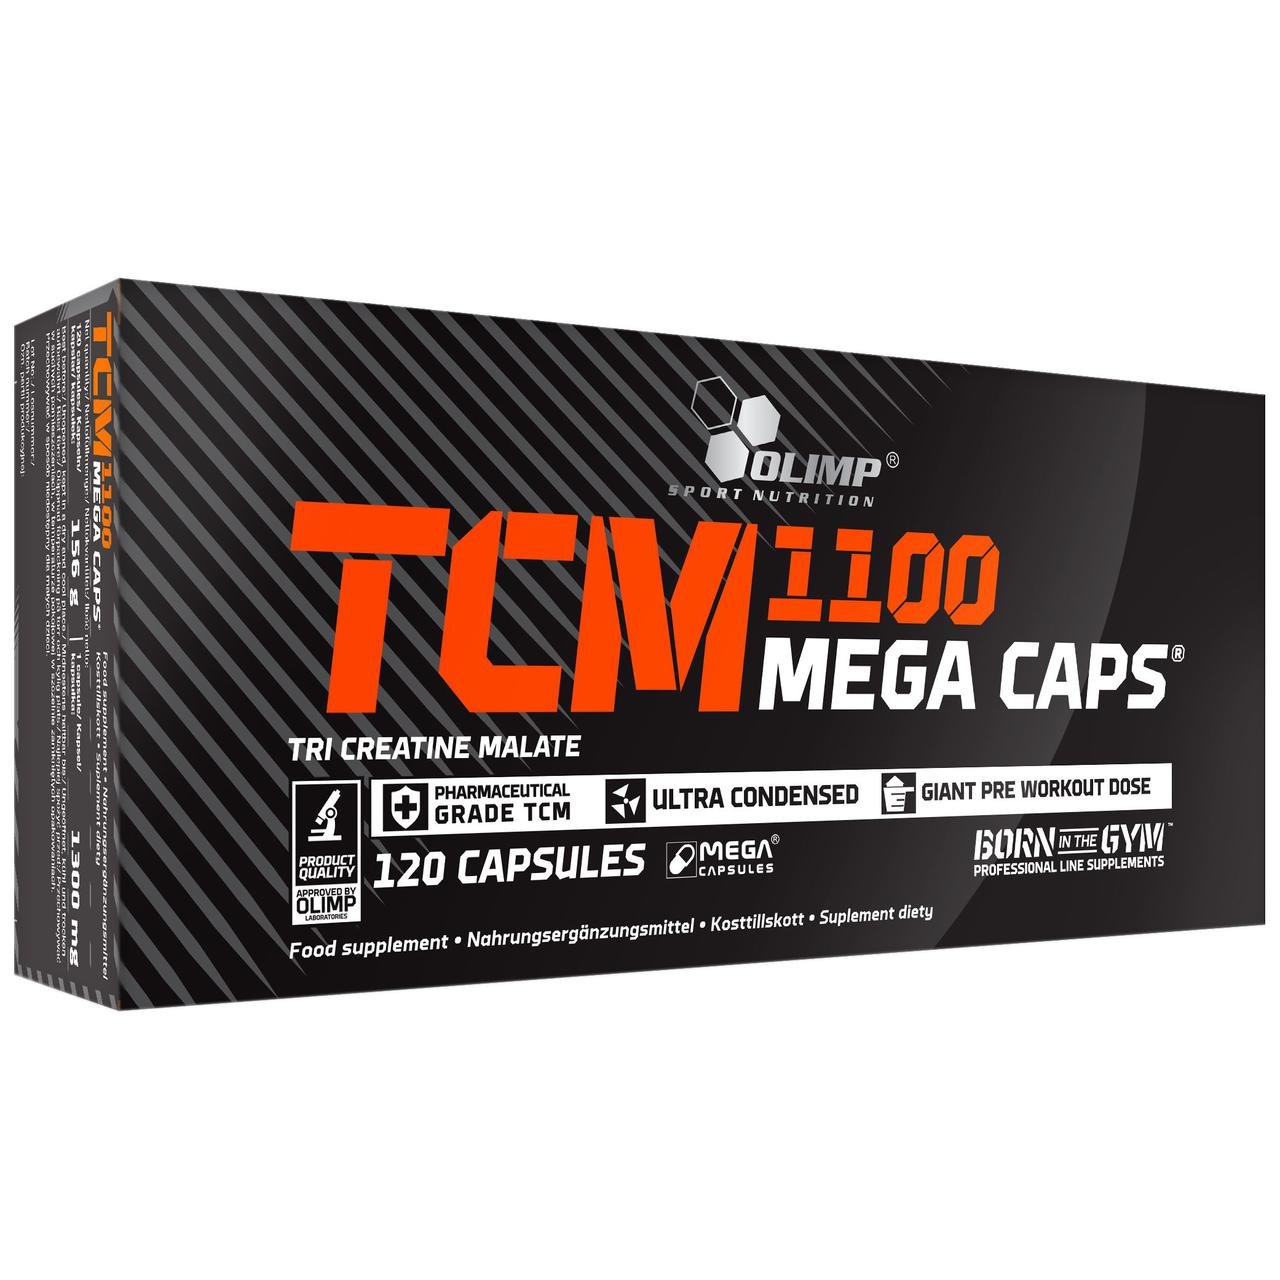 Три креатин малат Olimp TCM Mega Caps 1100 (120 капс) олимп тсм мега капс,  мл, Olimp Labs. Три-креатин малат. 